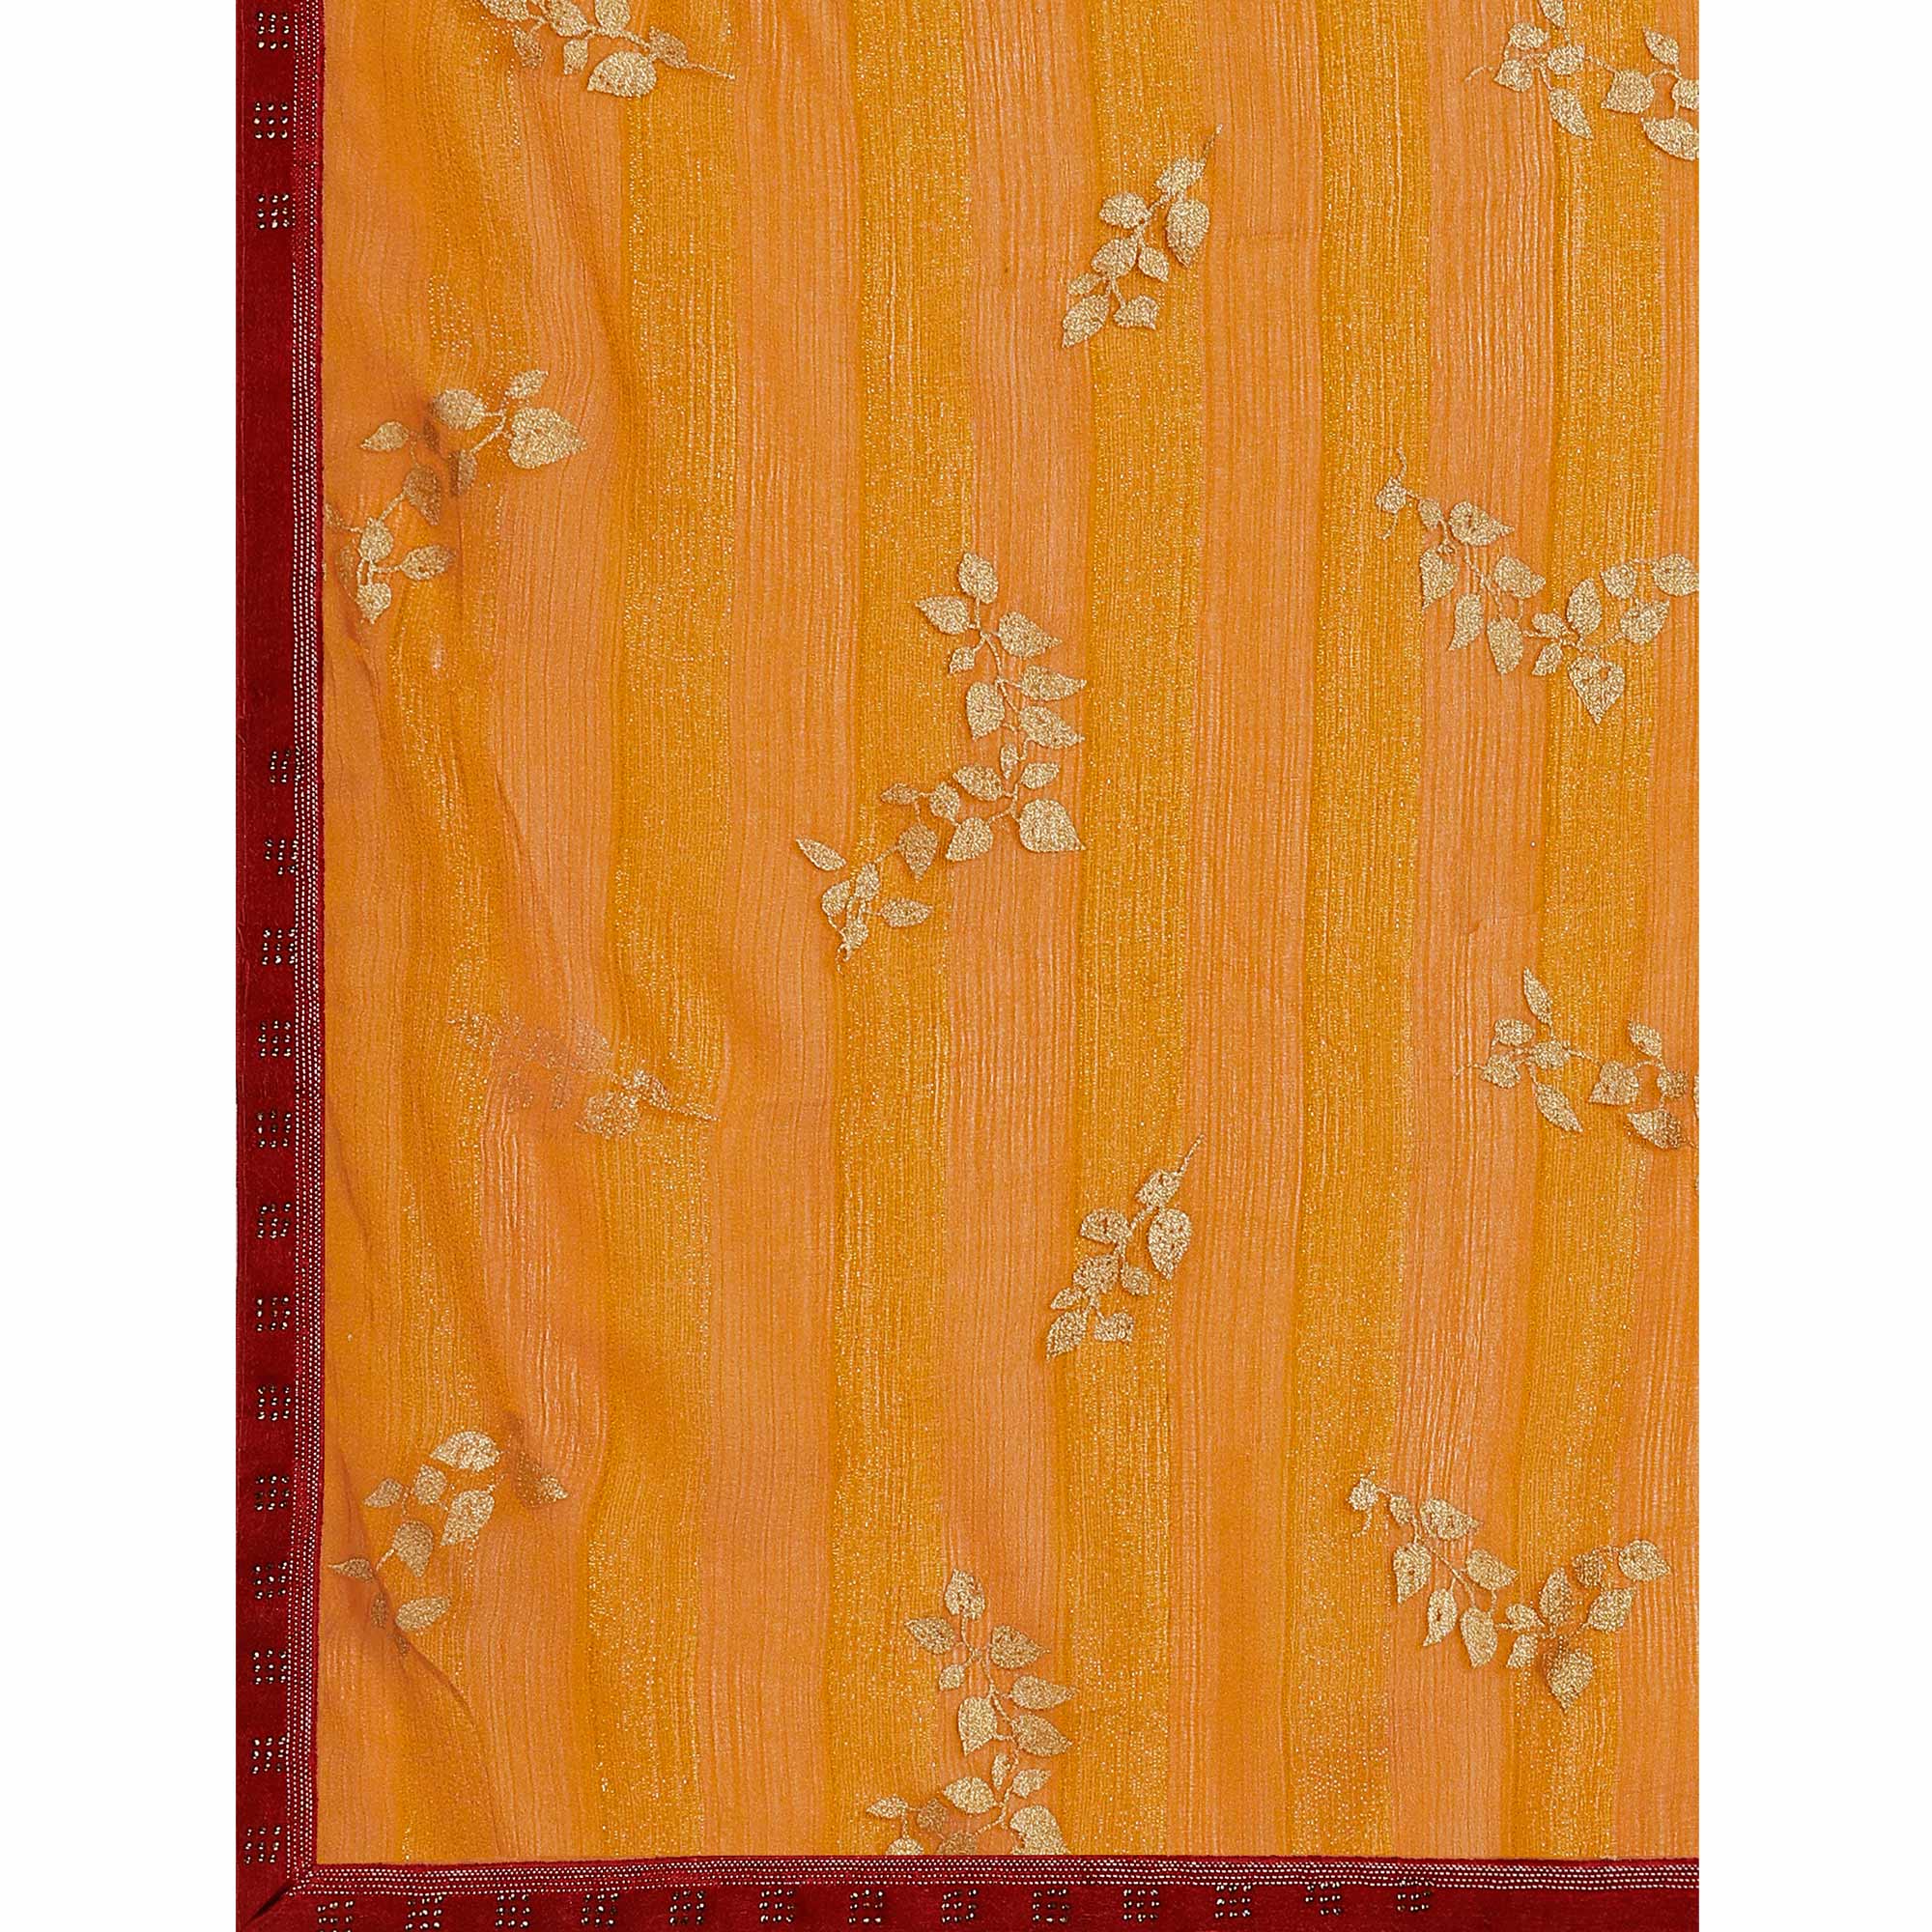 Mustard Foil Printed Chiffon Saree With Lace Border